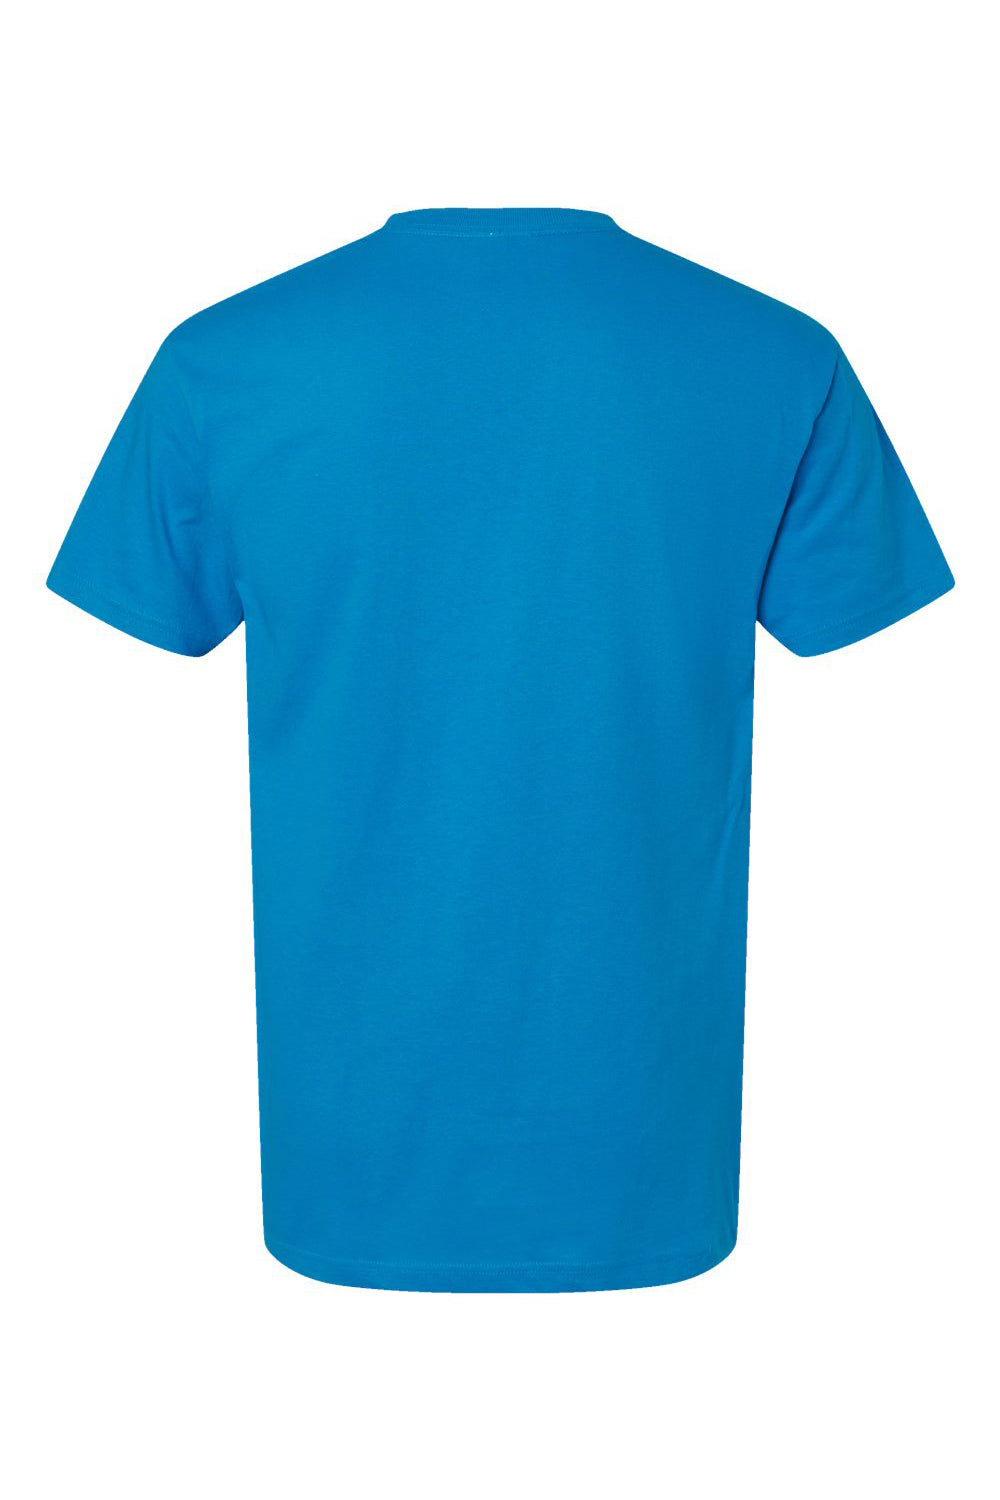 M&O 4800 Mens Gold Soft Touch Short Sleeve Crewneck T-Shirt Turquoise Blue Flat Back